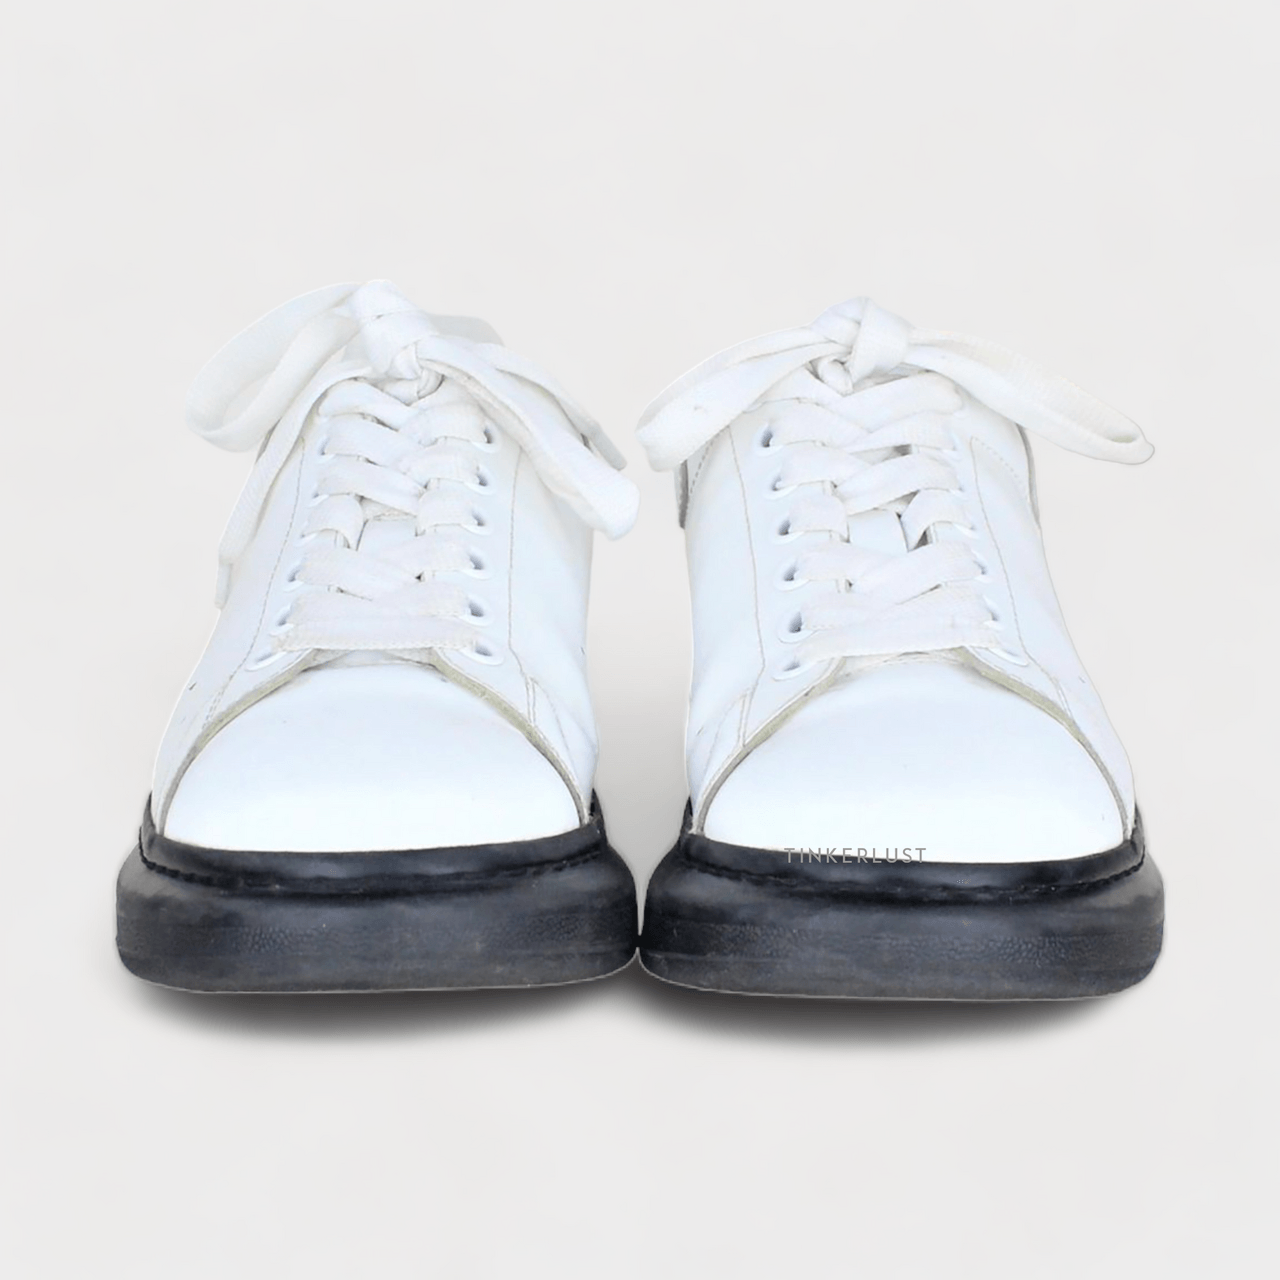 Alexander McQueen Black & White Sneakers